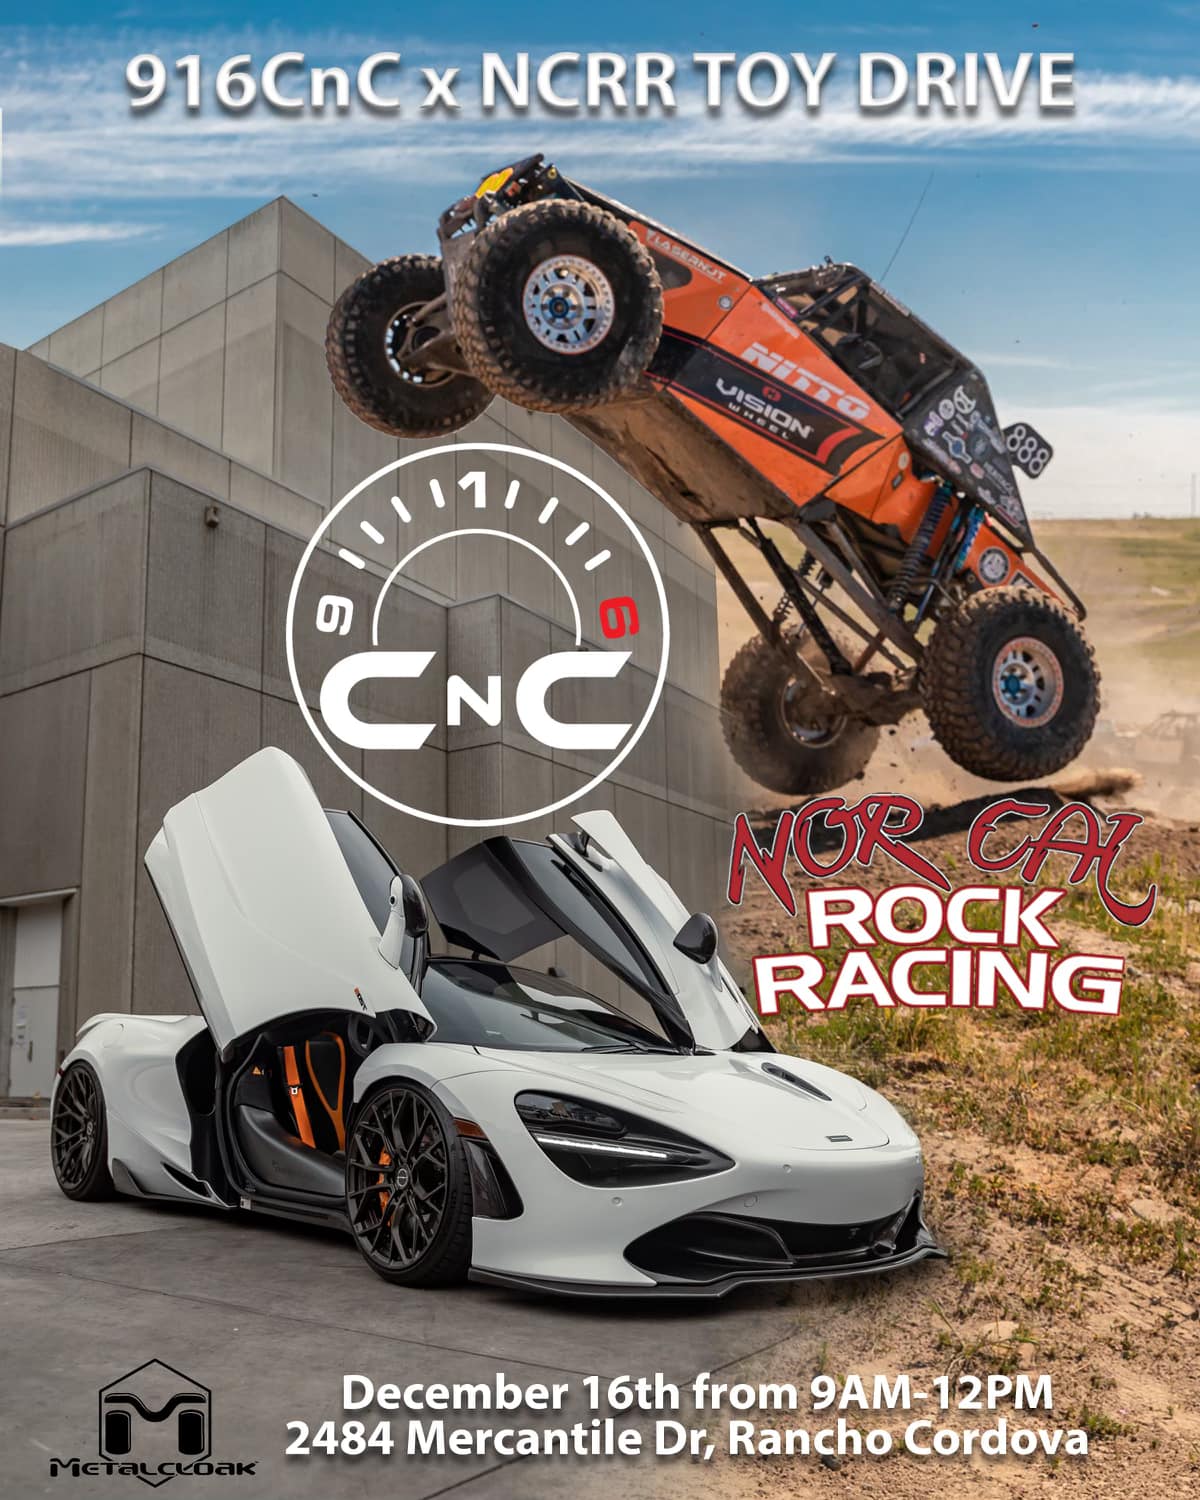 NorCal Rock Racing & 916 CnC Toy Drive